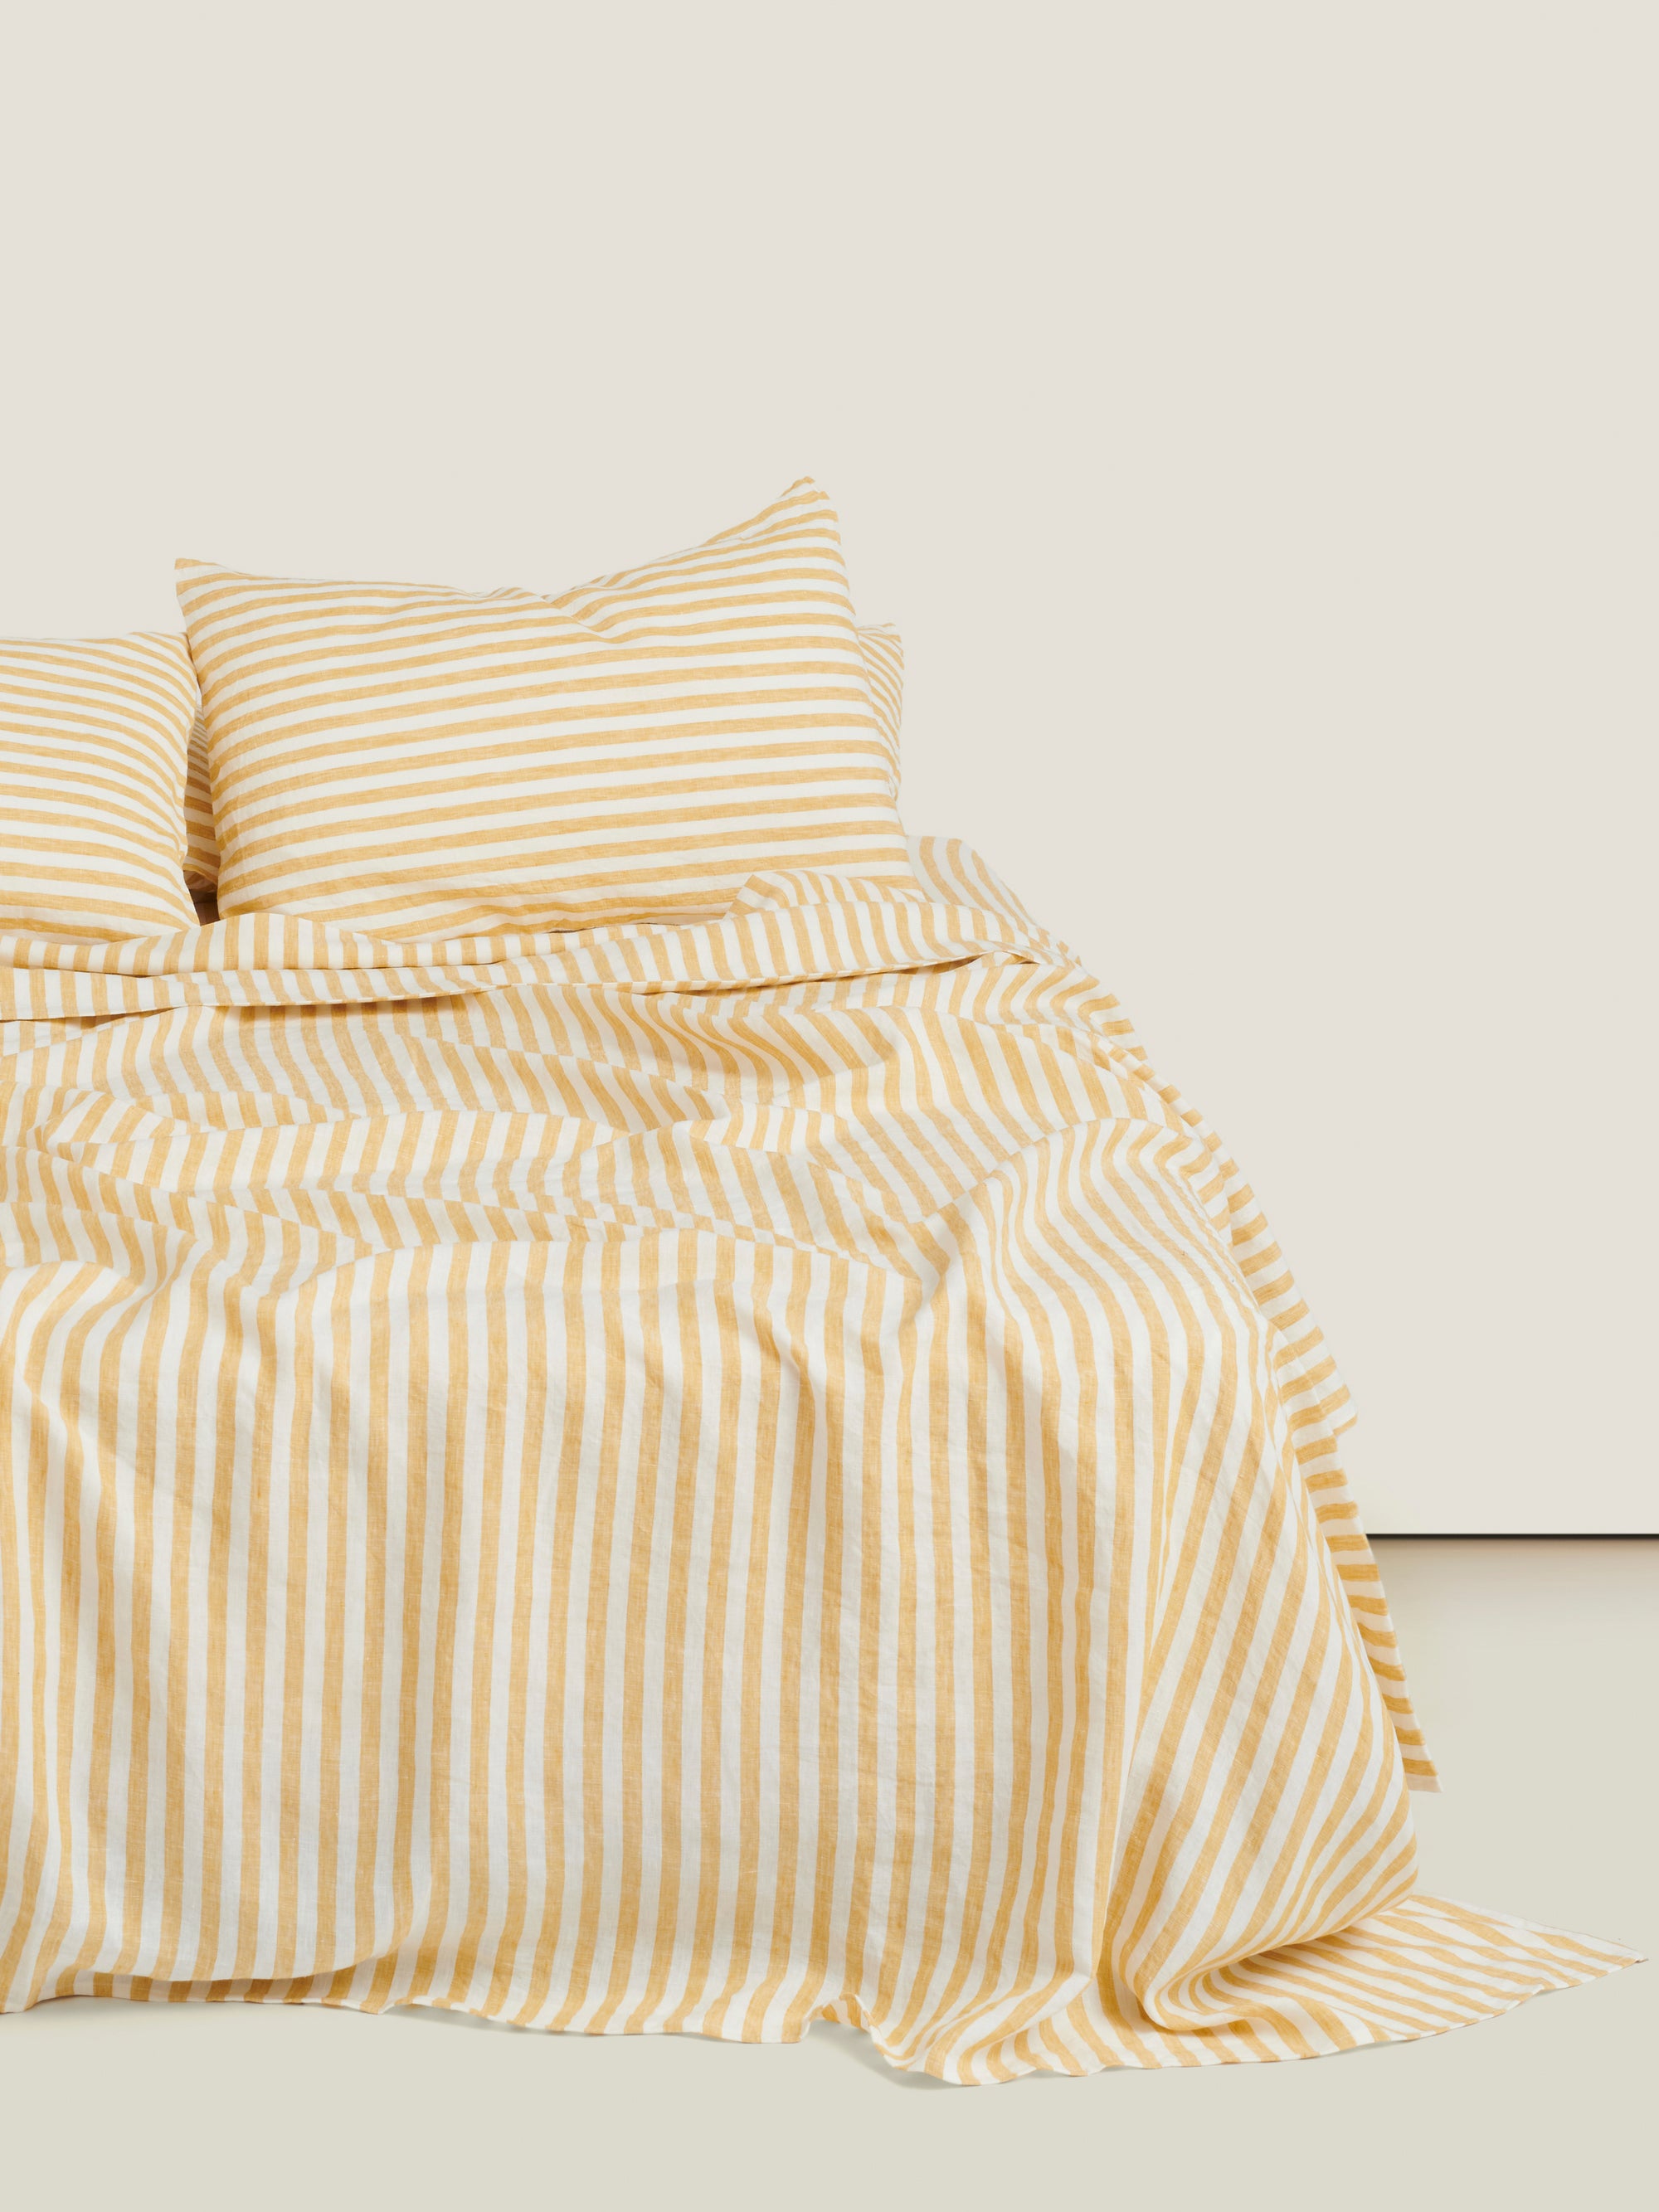 Linen Duvet Cover Set - Yellow Stripes